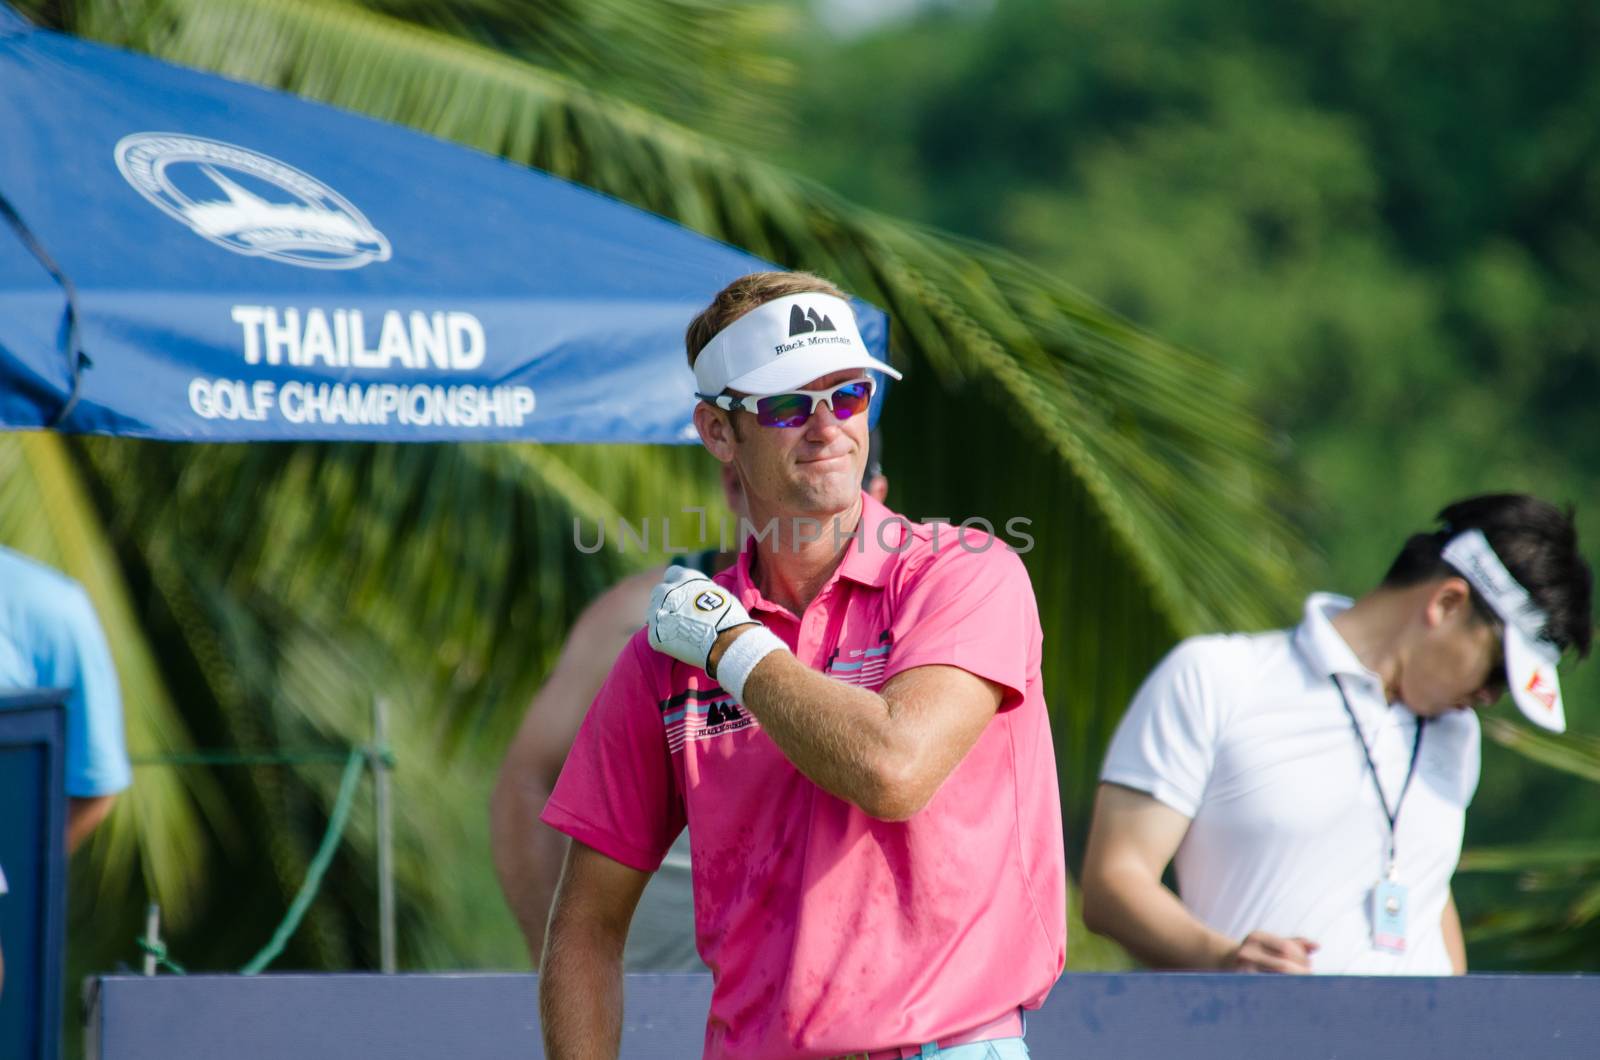 CHONBURI - DECEMBER 13 : Berry Henson of USA player in Thailand Golf Championship 2015 at Amata Spring Country Club on December 13, 2015 in Chonburi, Thailand.